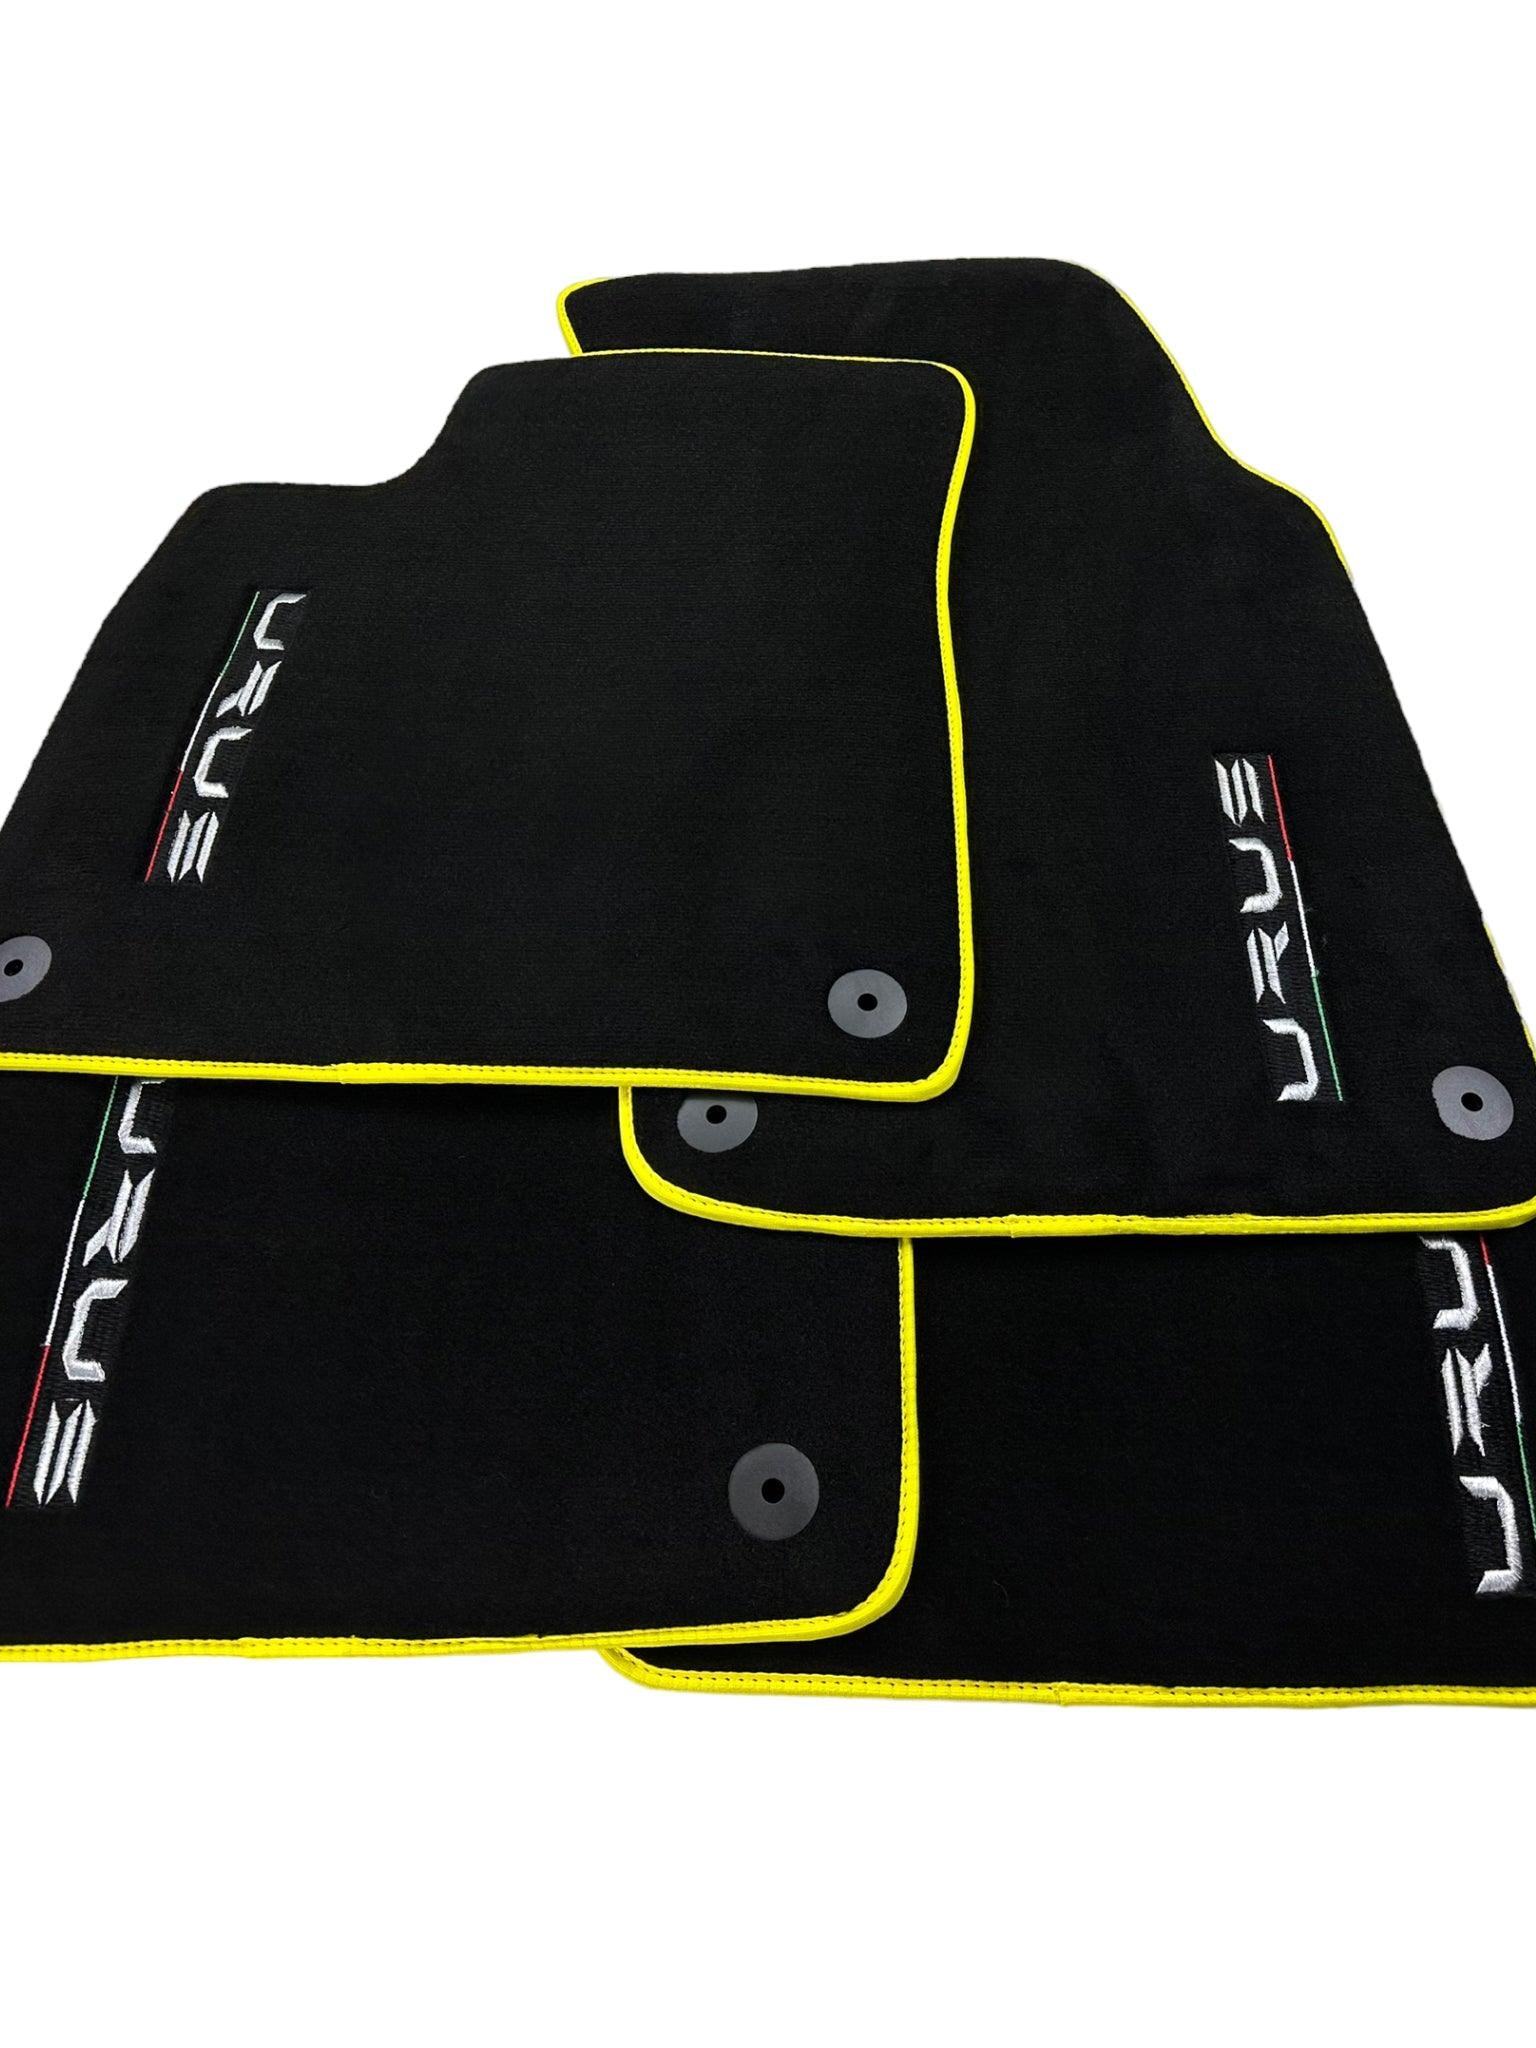 Black Floor Mats For Lamborghini Urus Tailored With Yellow Trim - AutoWin